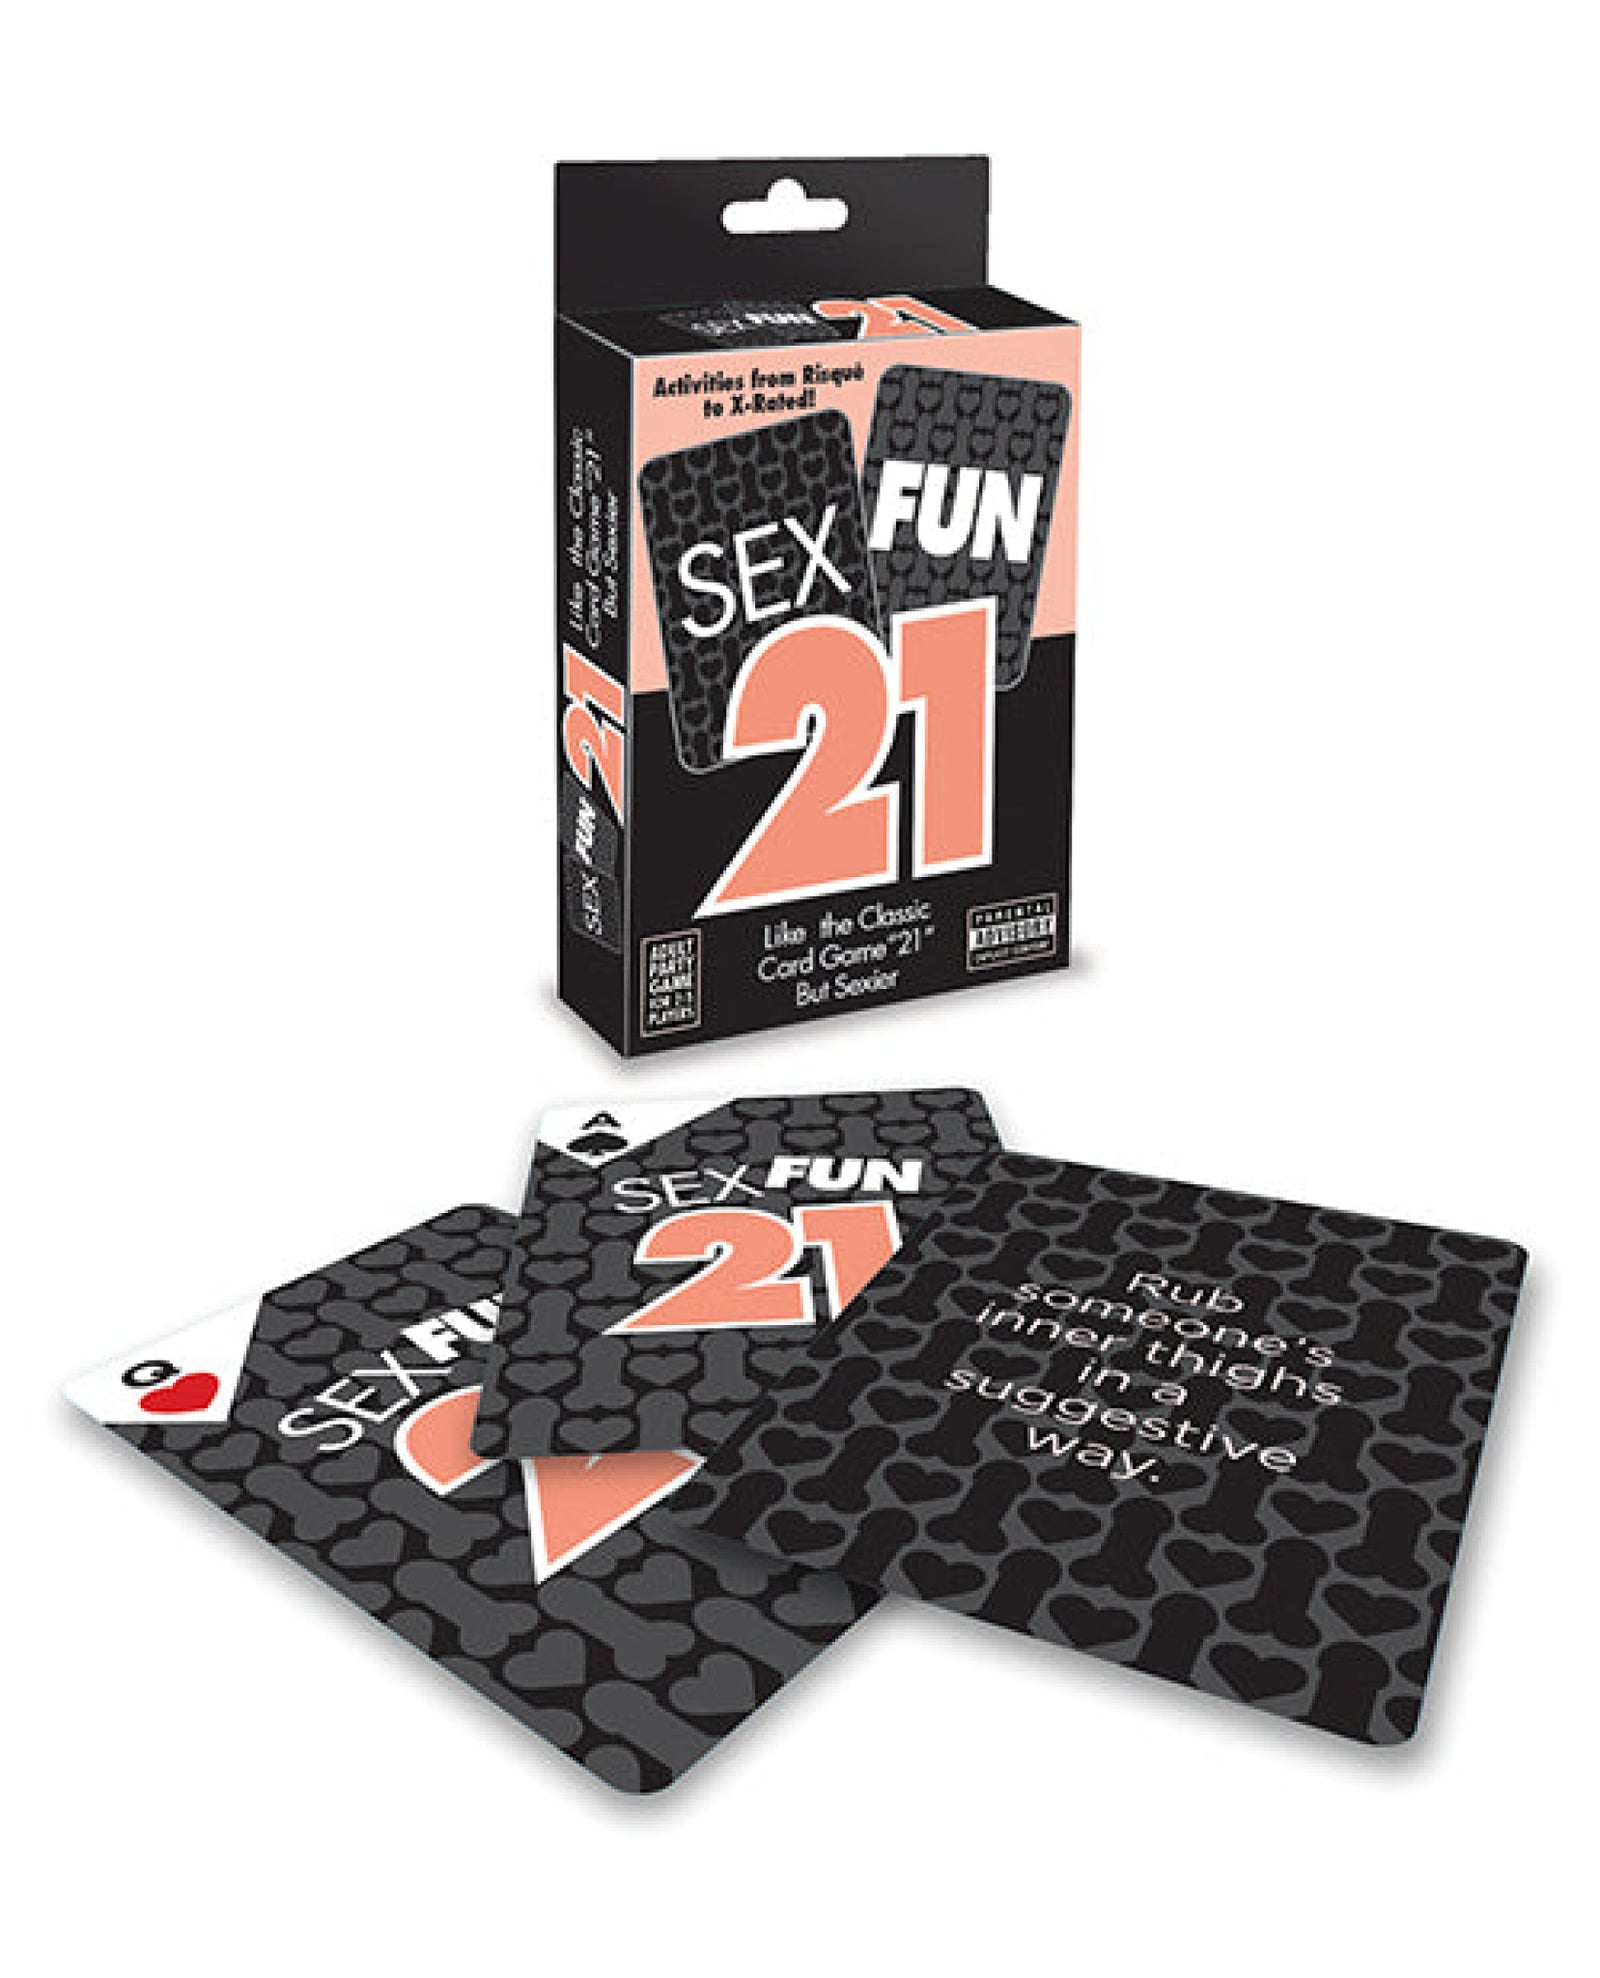 Sex Fun 21 Card Game Little Genie